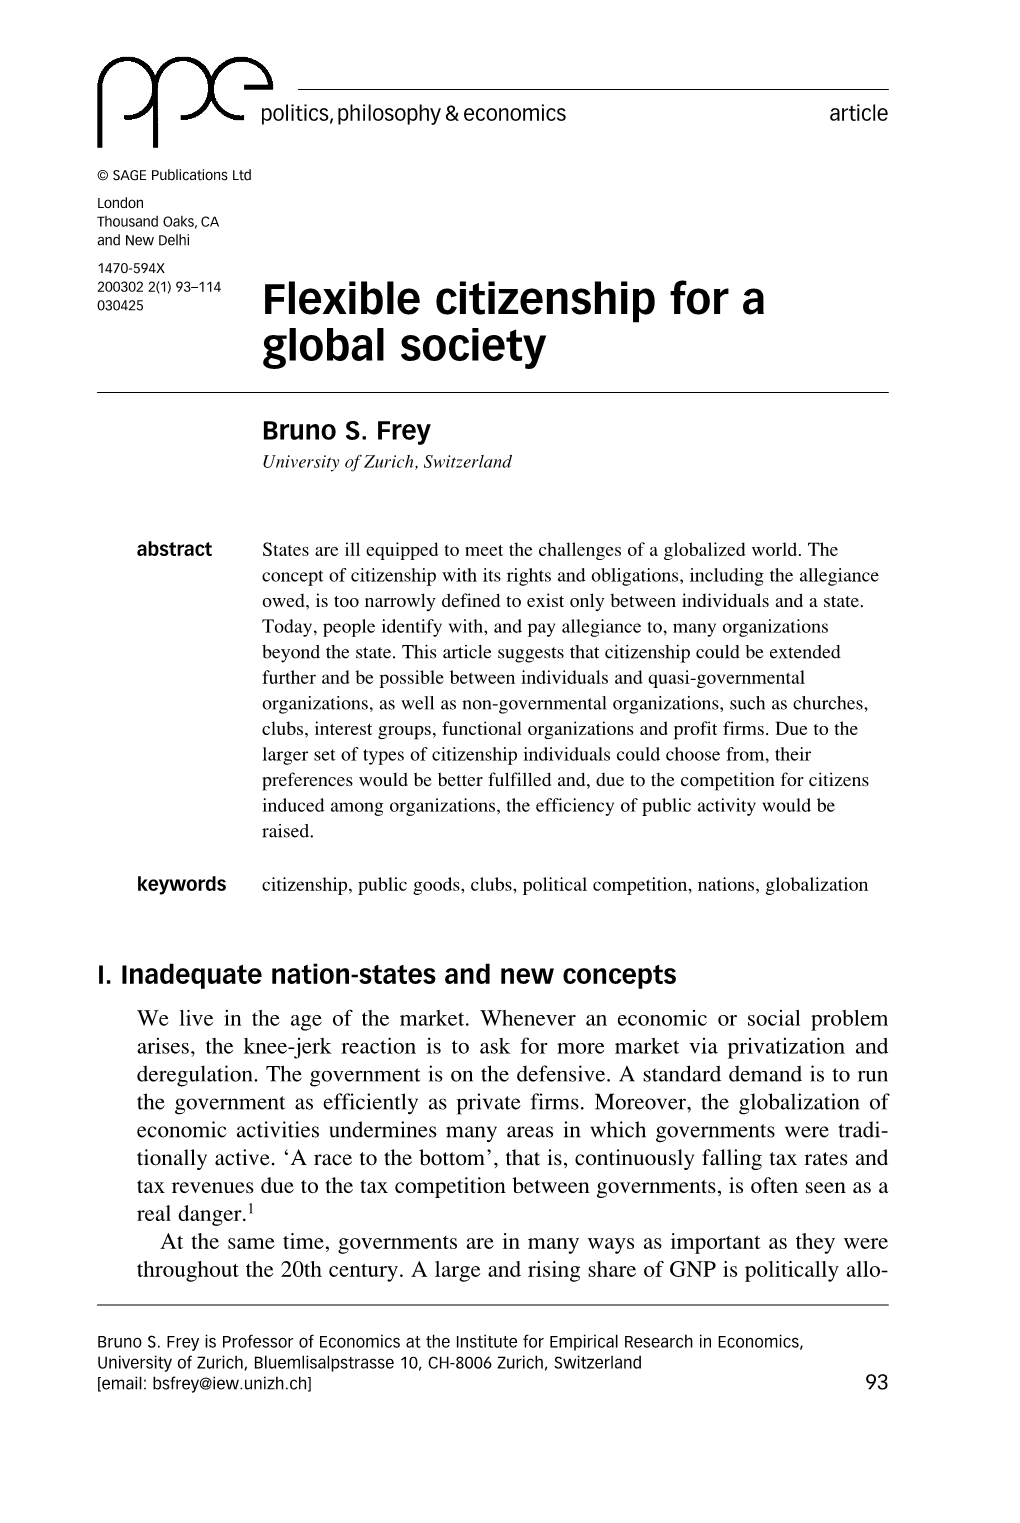 Flexible Citizenship for a Global Society